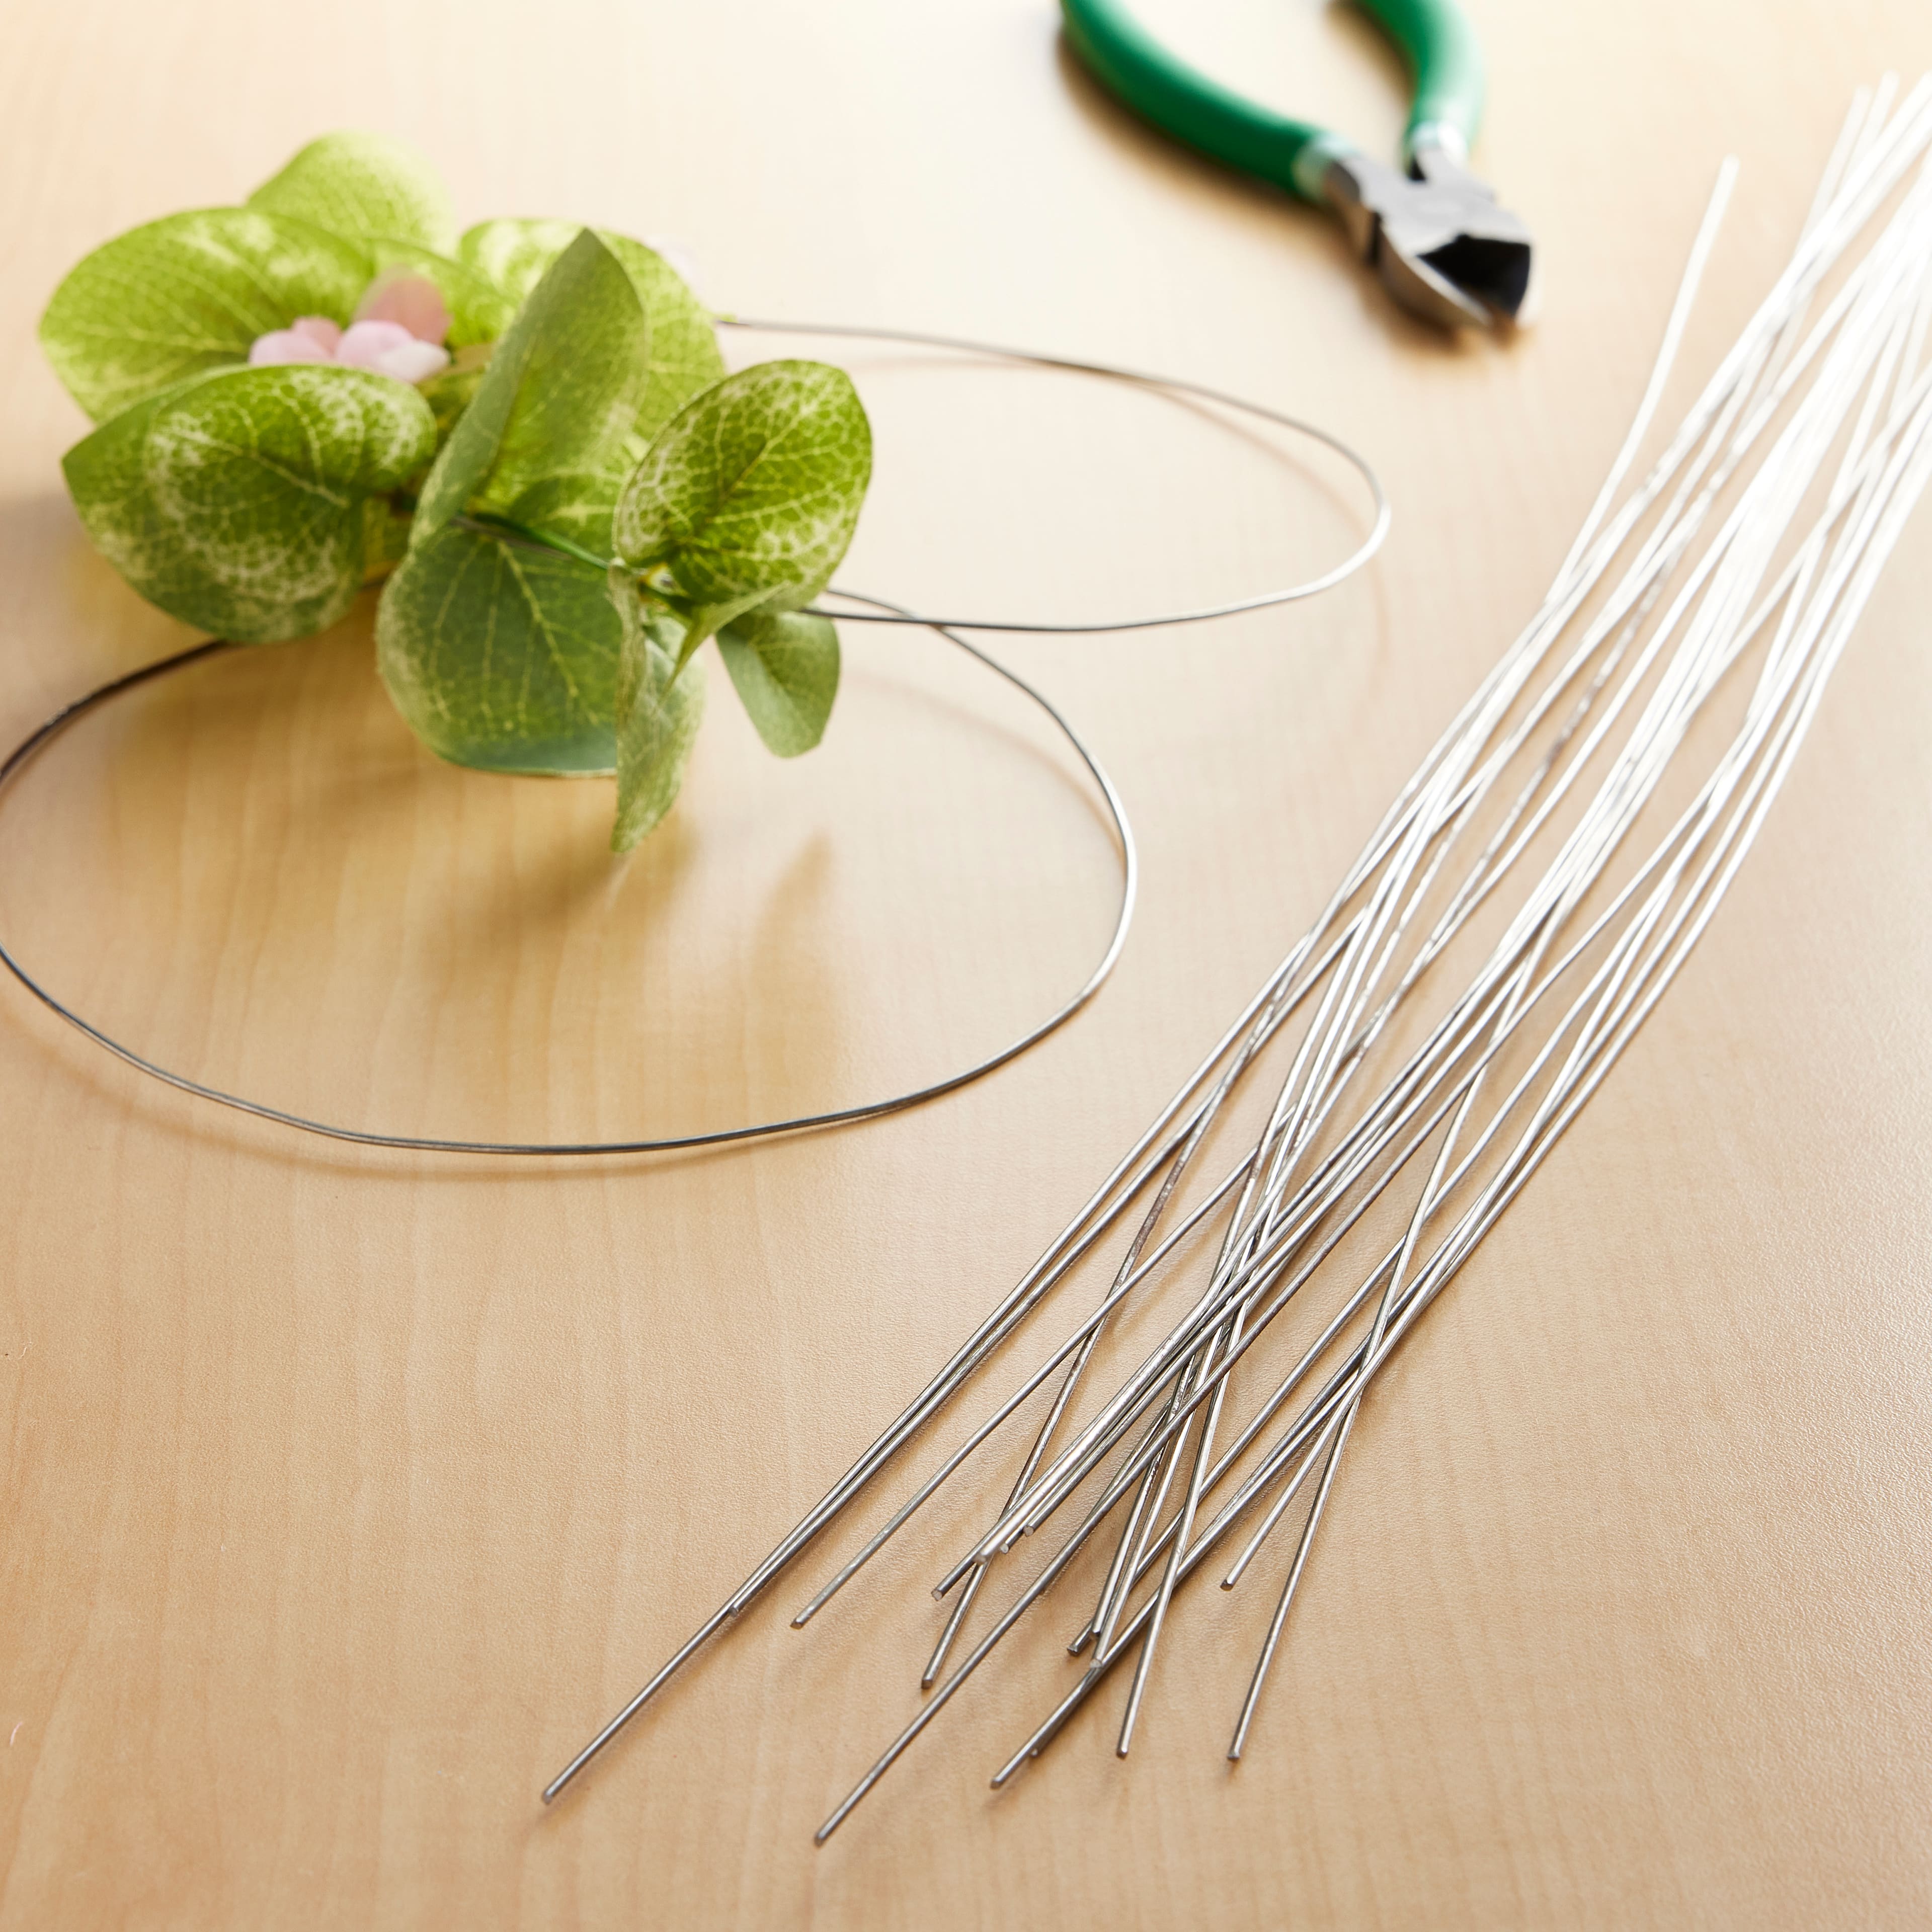 22 gauge Floral Wire – 300 / 18 inch stems